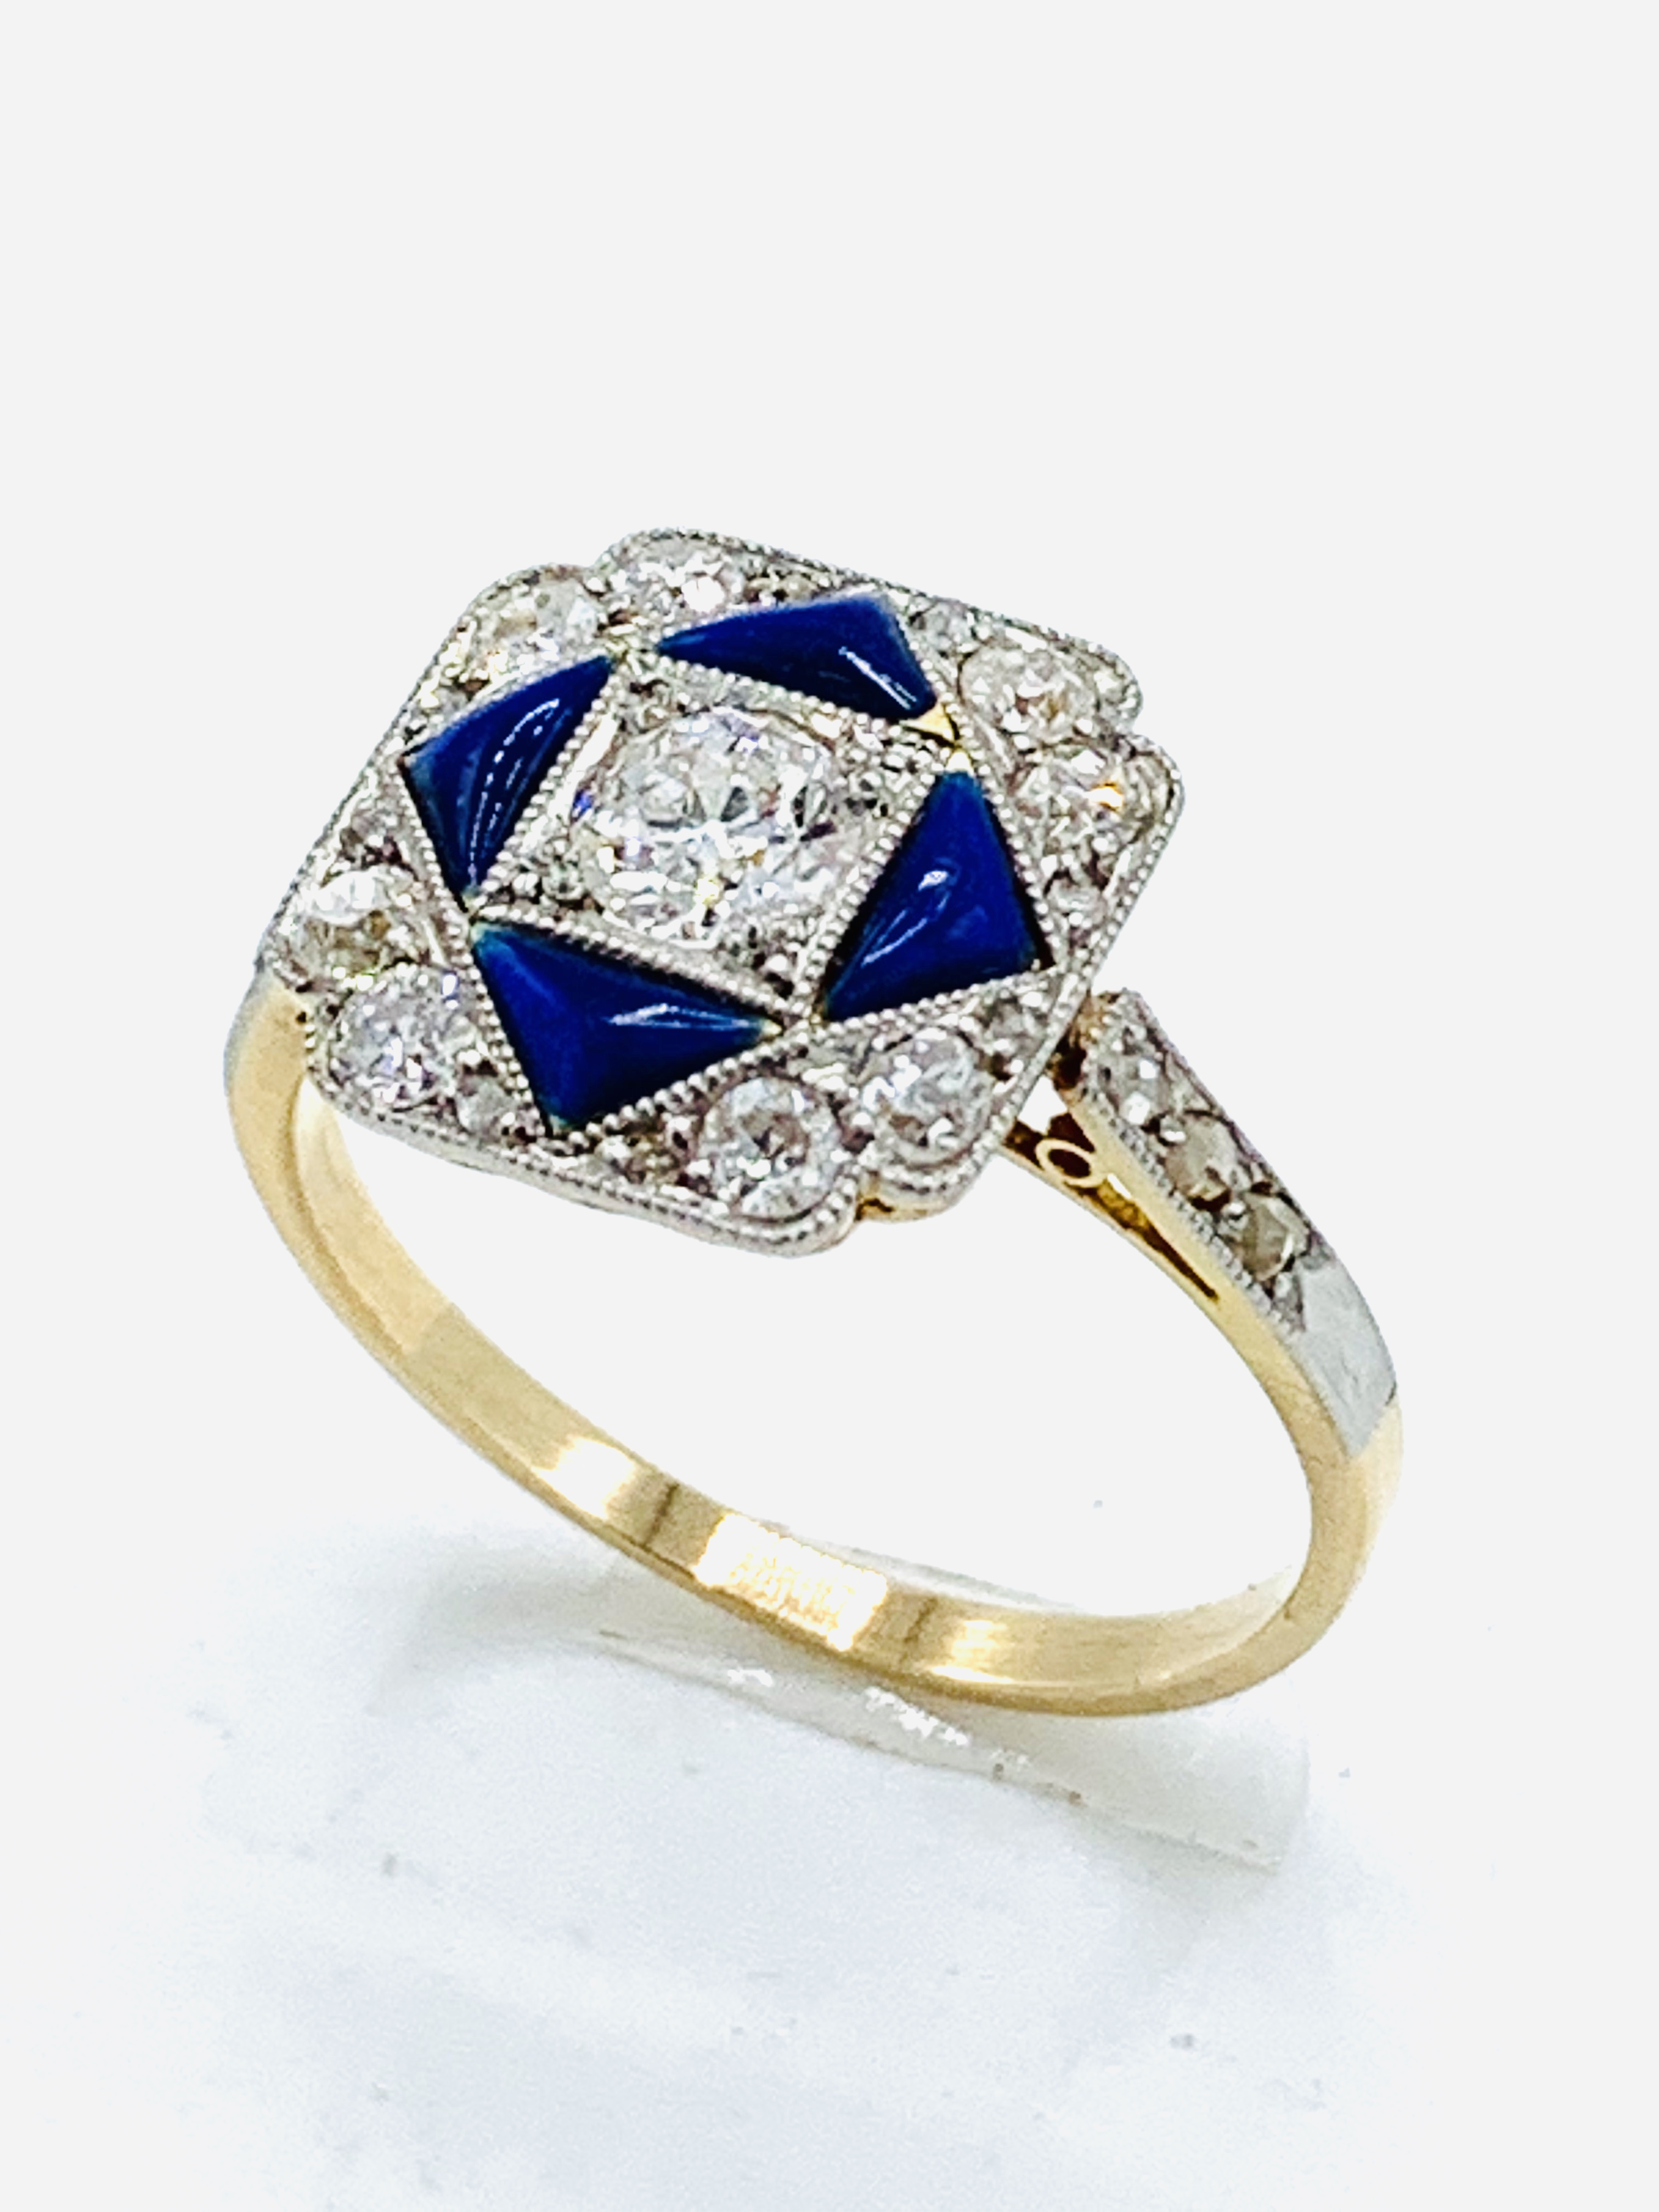 Diamond and blue enamel ring. - Image 6 of 9